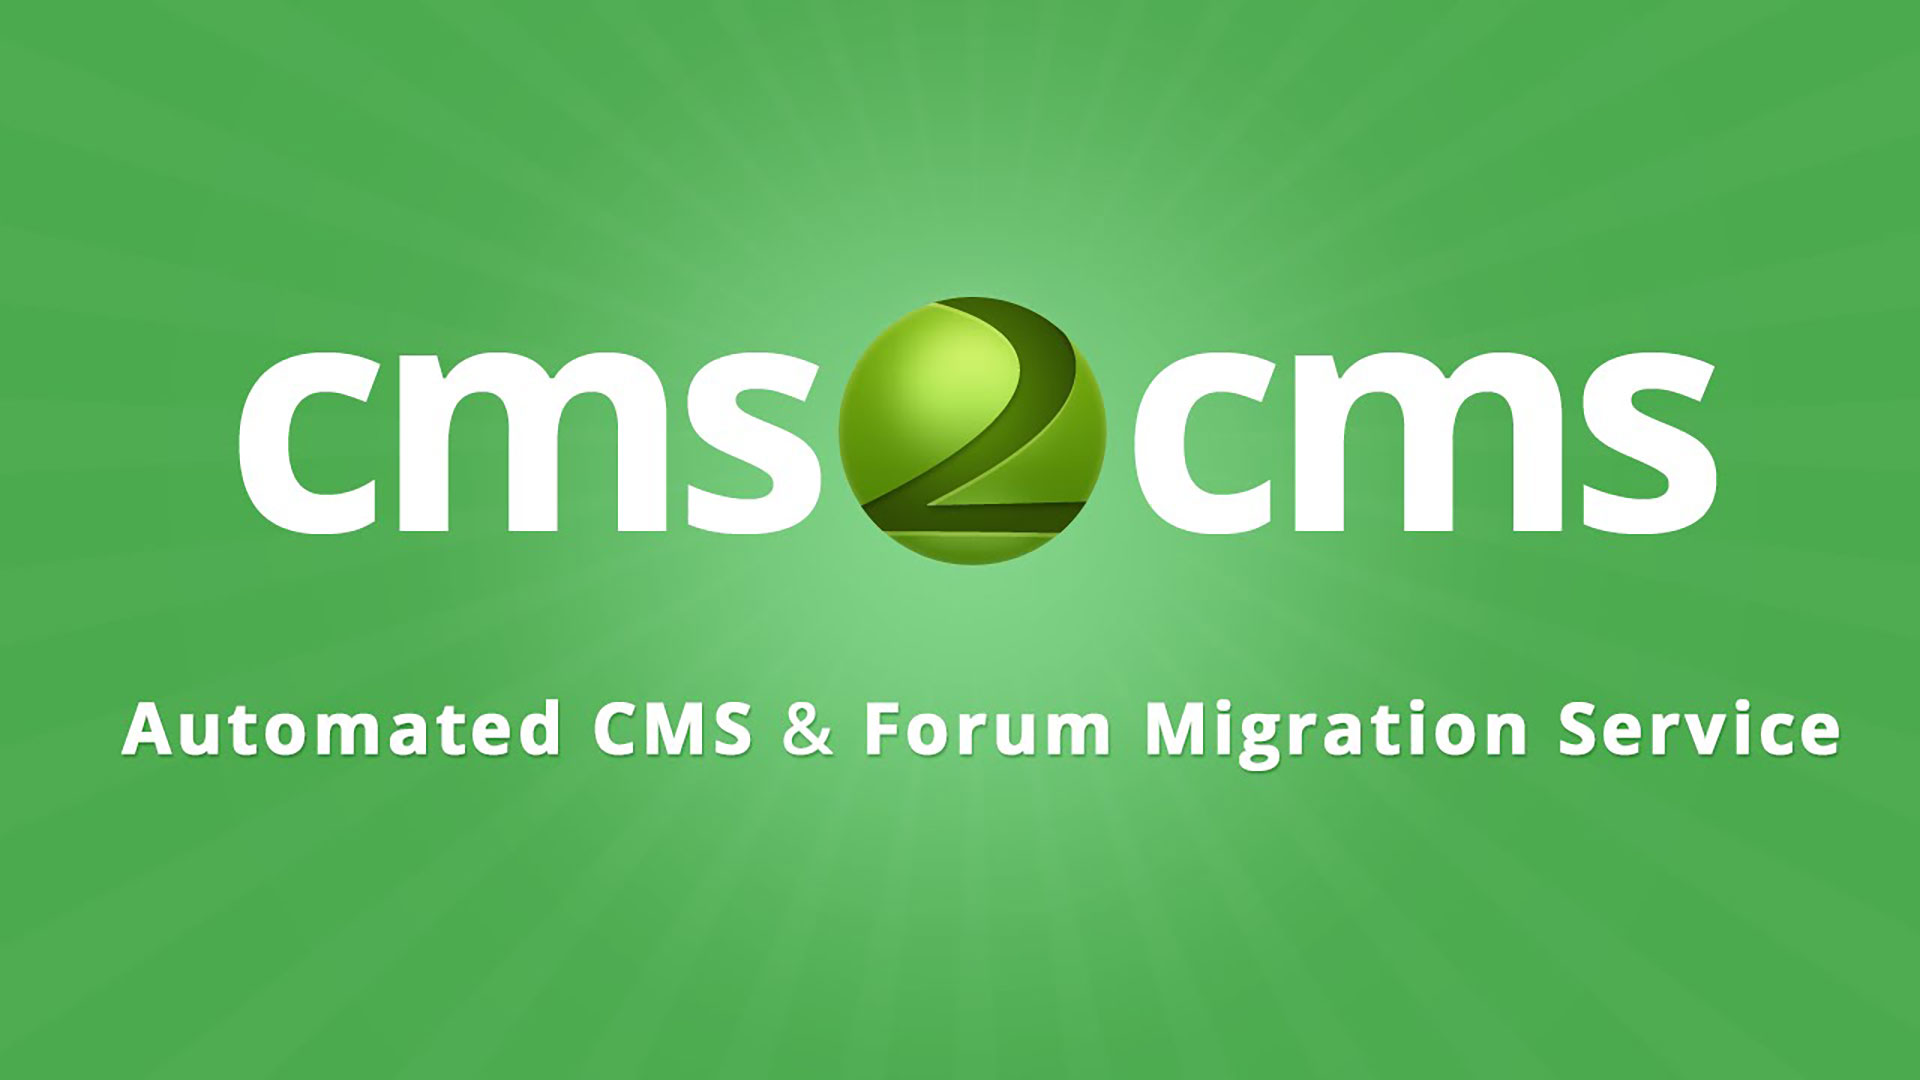 Cms2cms Website Migration Servicenbsp» Entrepreneur Decision Maker Connector Podcaster Educator